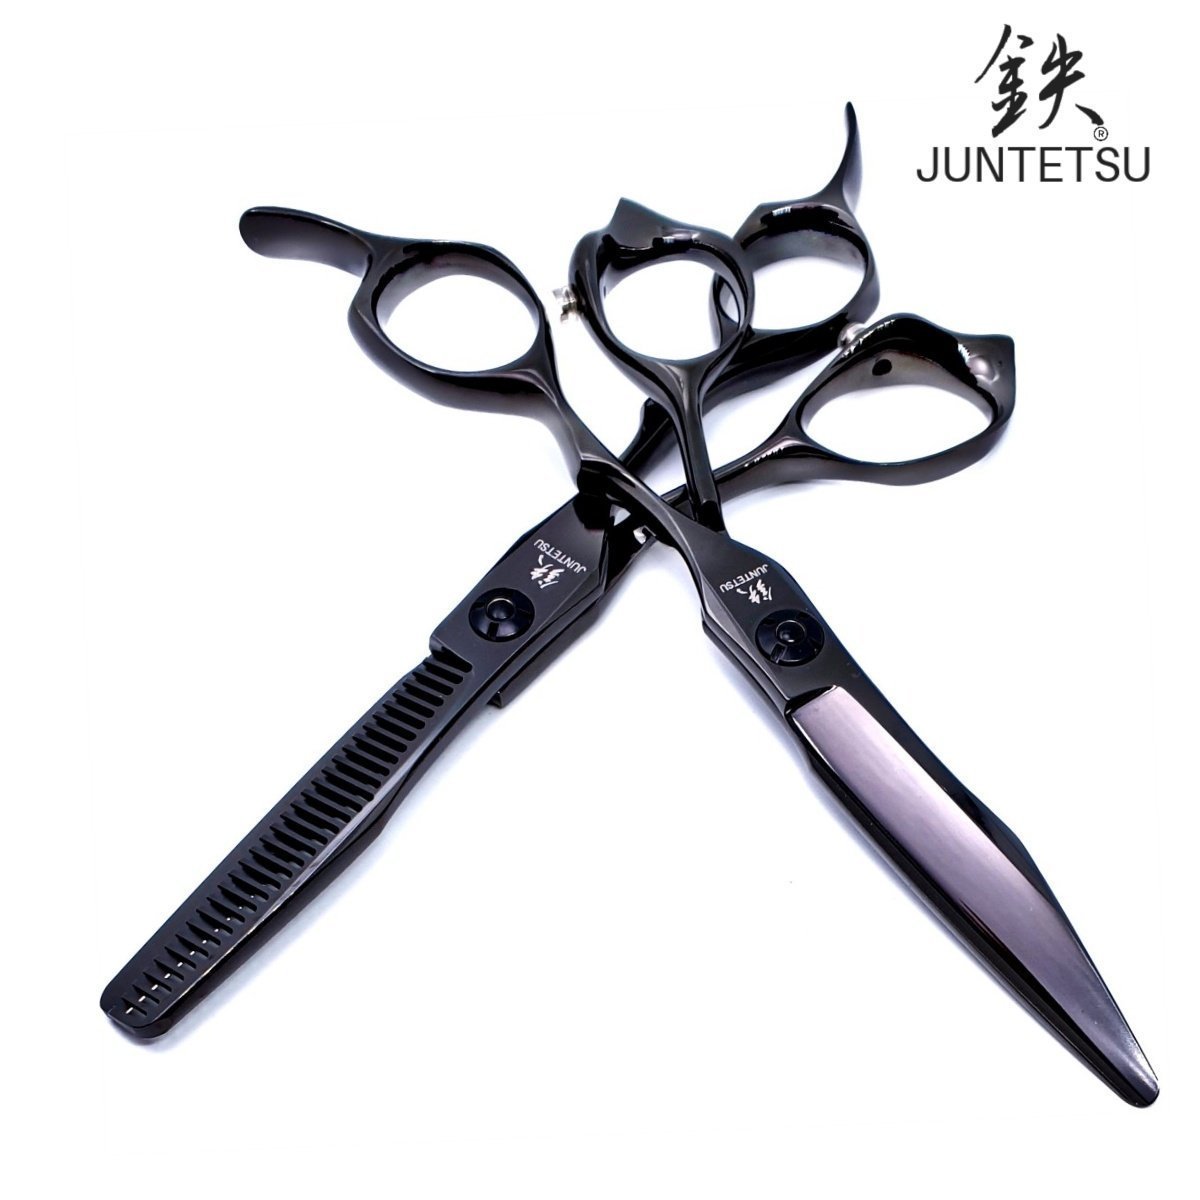 Juntetsu Night Cutting & Thinning Scissors Set - Japan Scissors USA